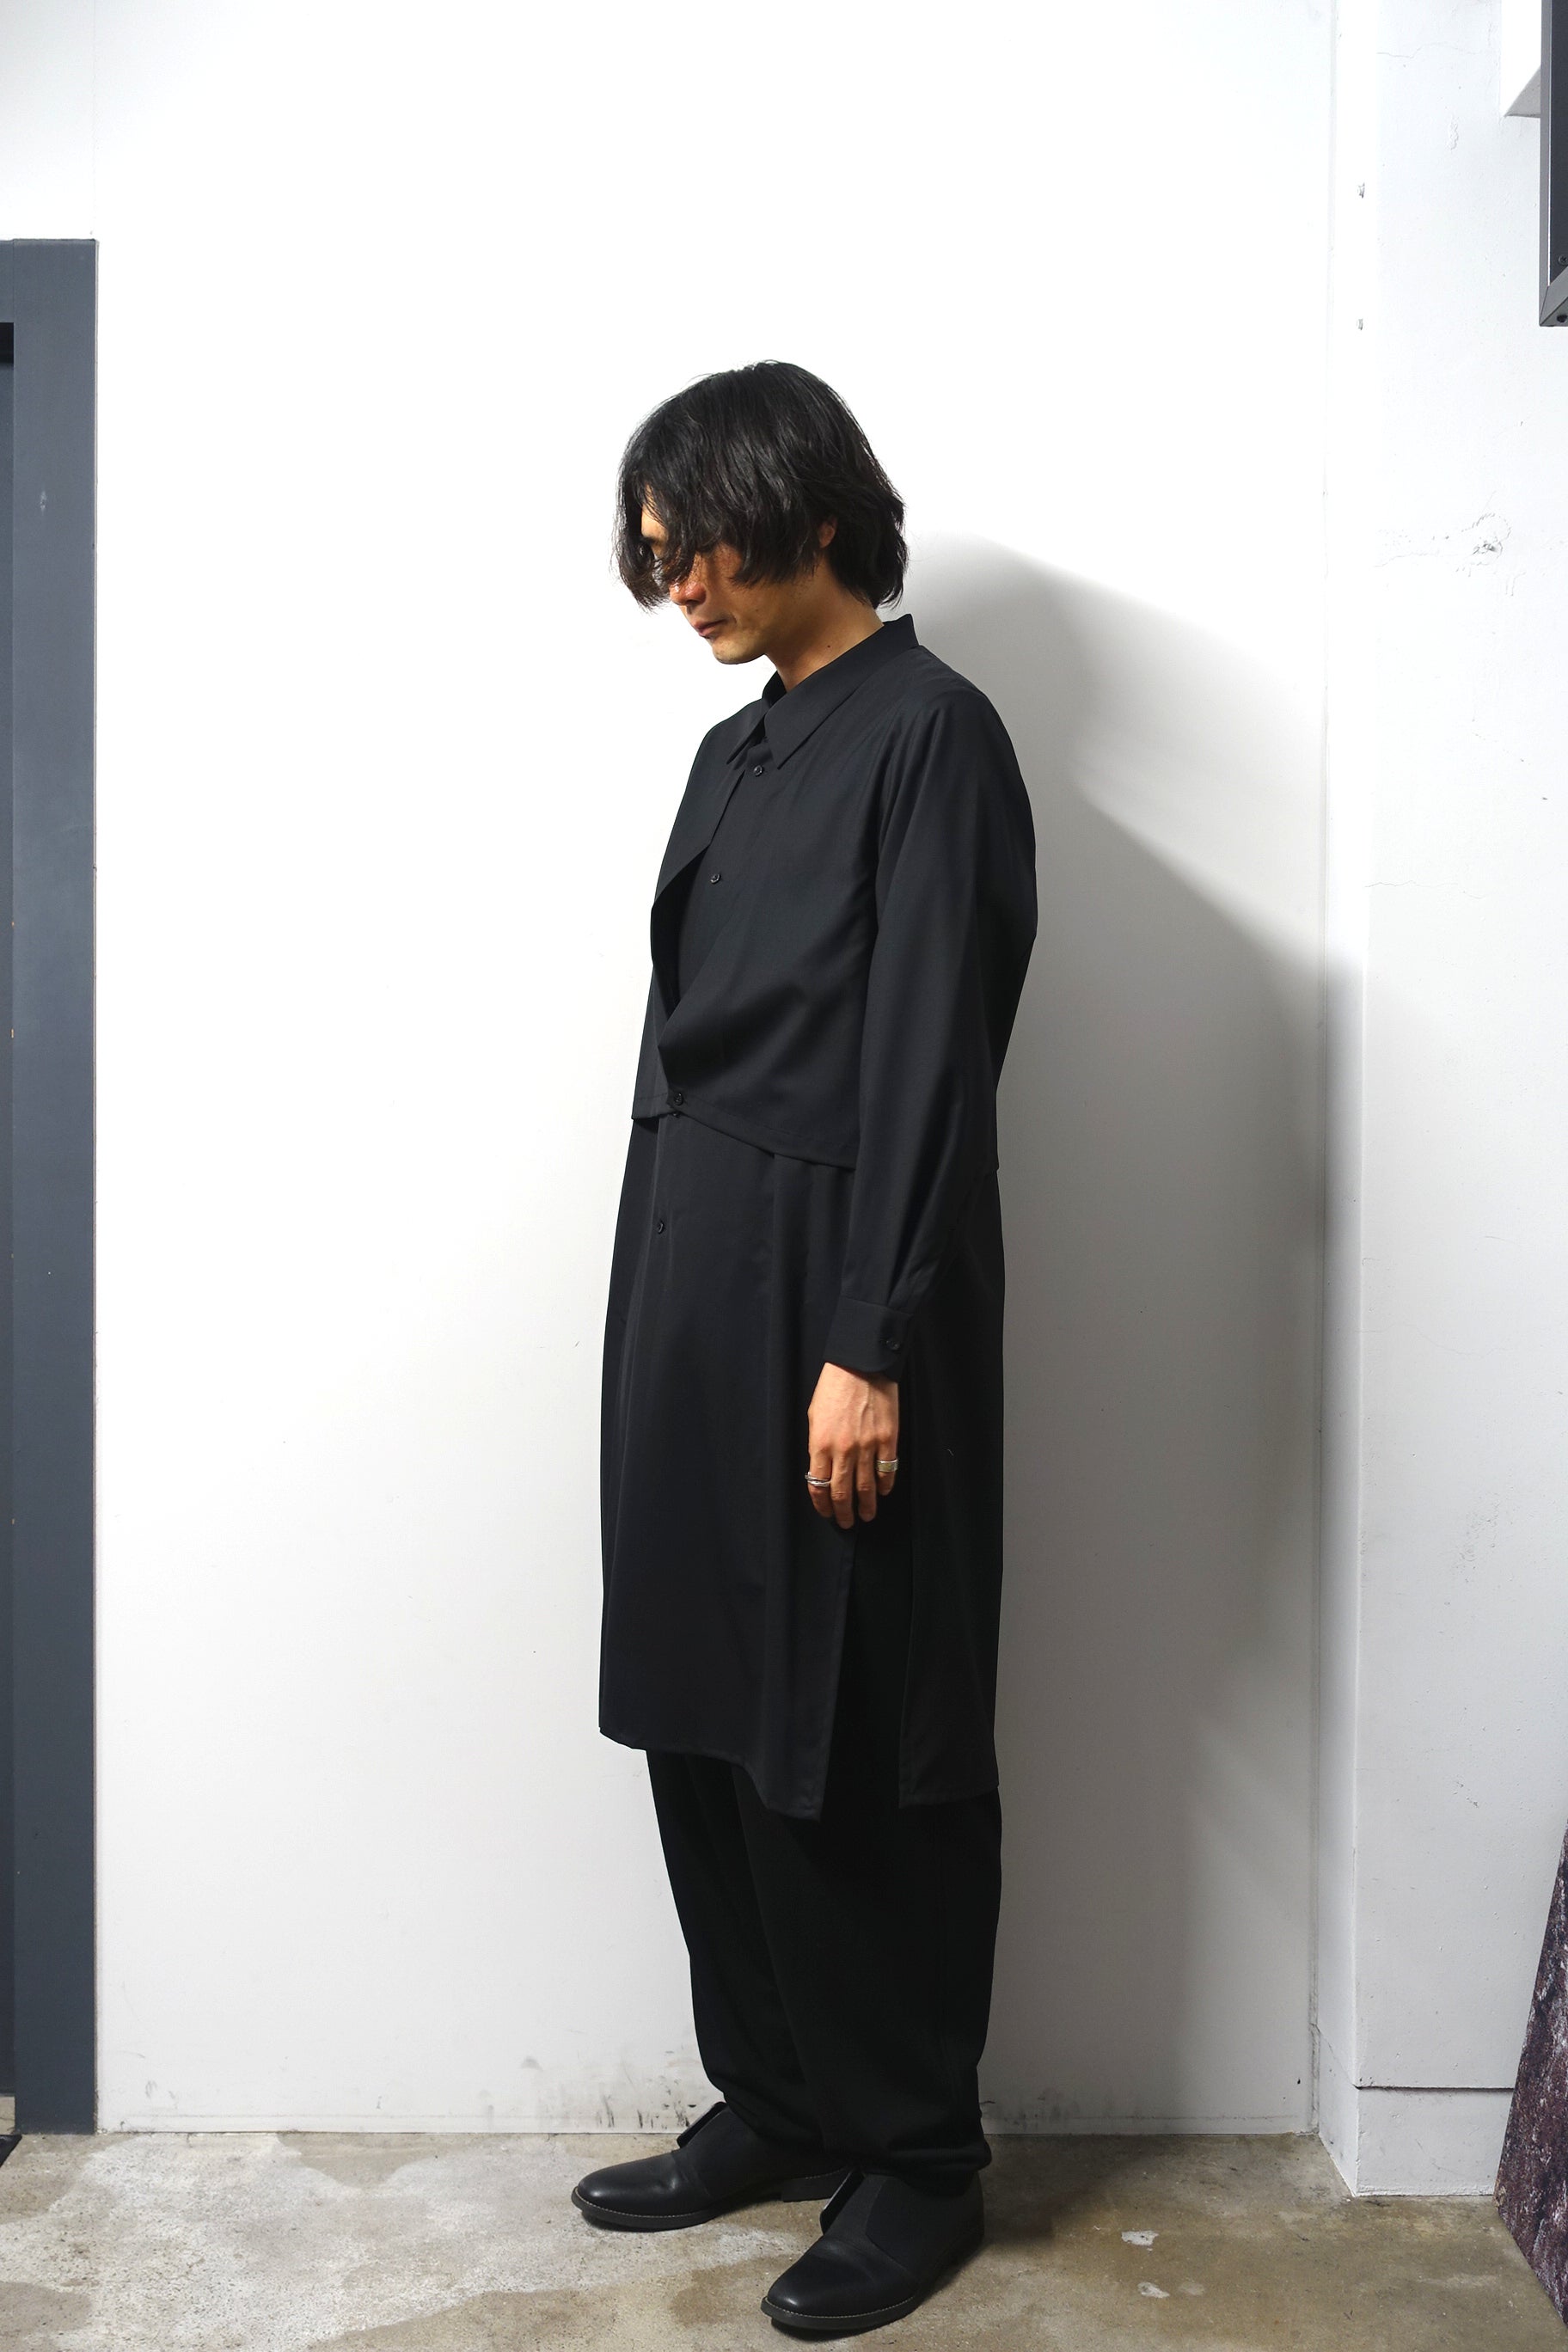 ETHOSENS(エトセンス)/Coat shirt/Black 通販 取り扱い 